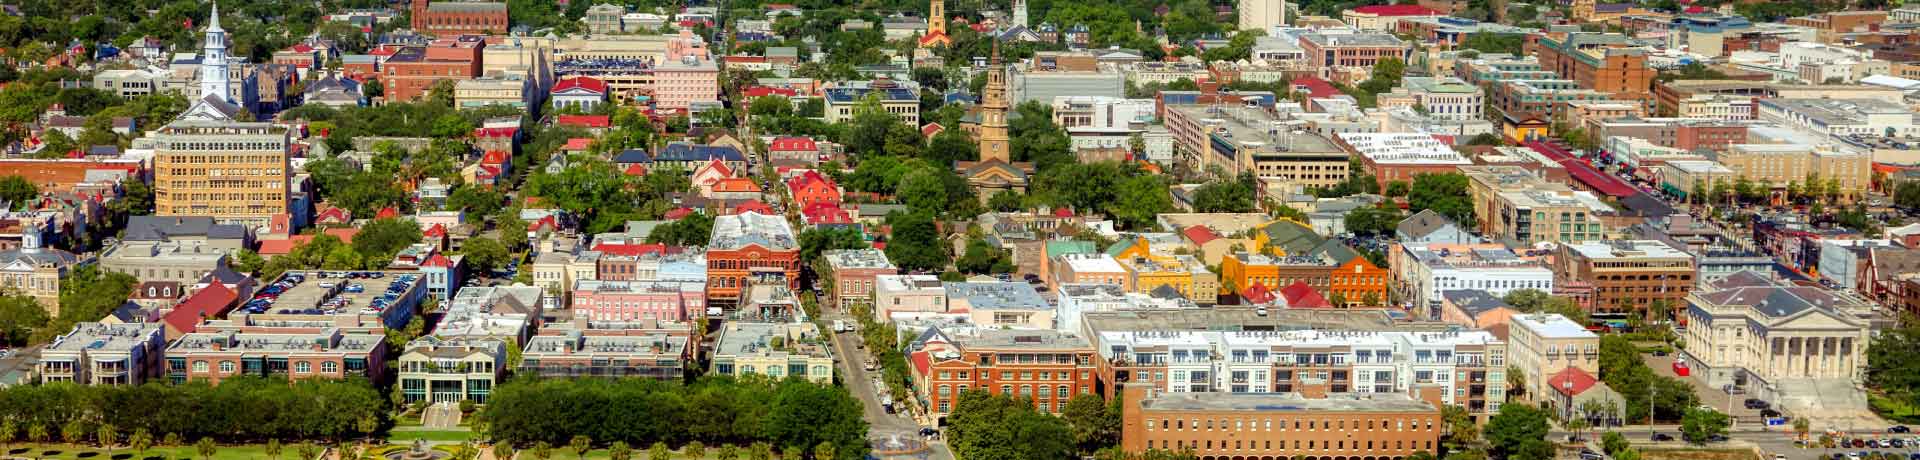  Aerial view of downtown Charleston, South Carolina